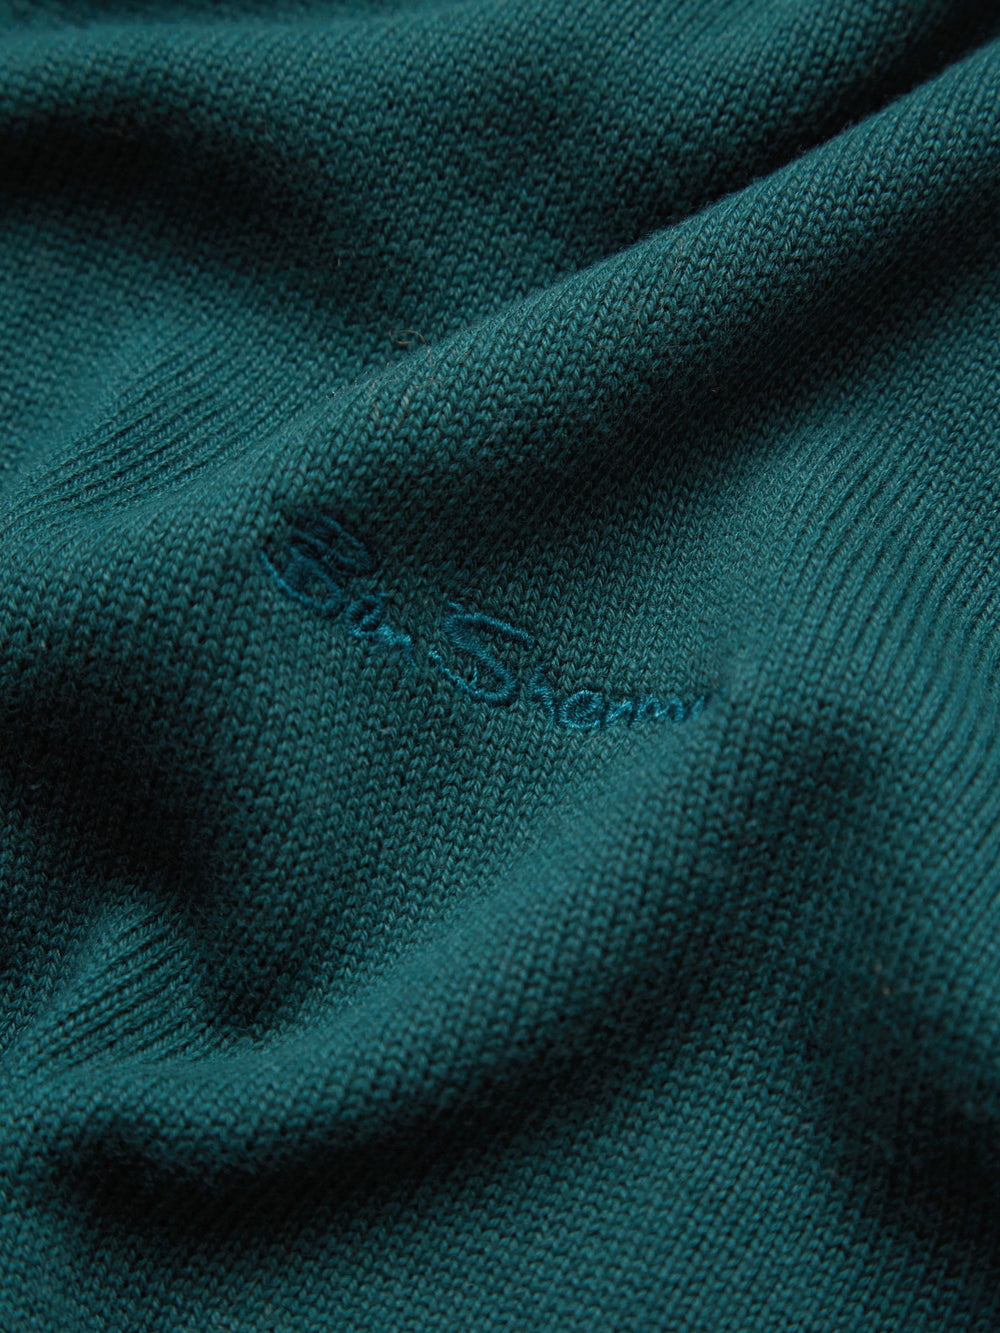 Signature Knit Crewneck Sweater - Ocean Green